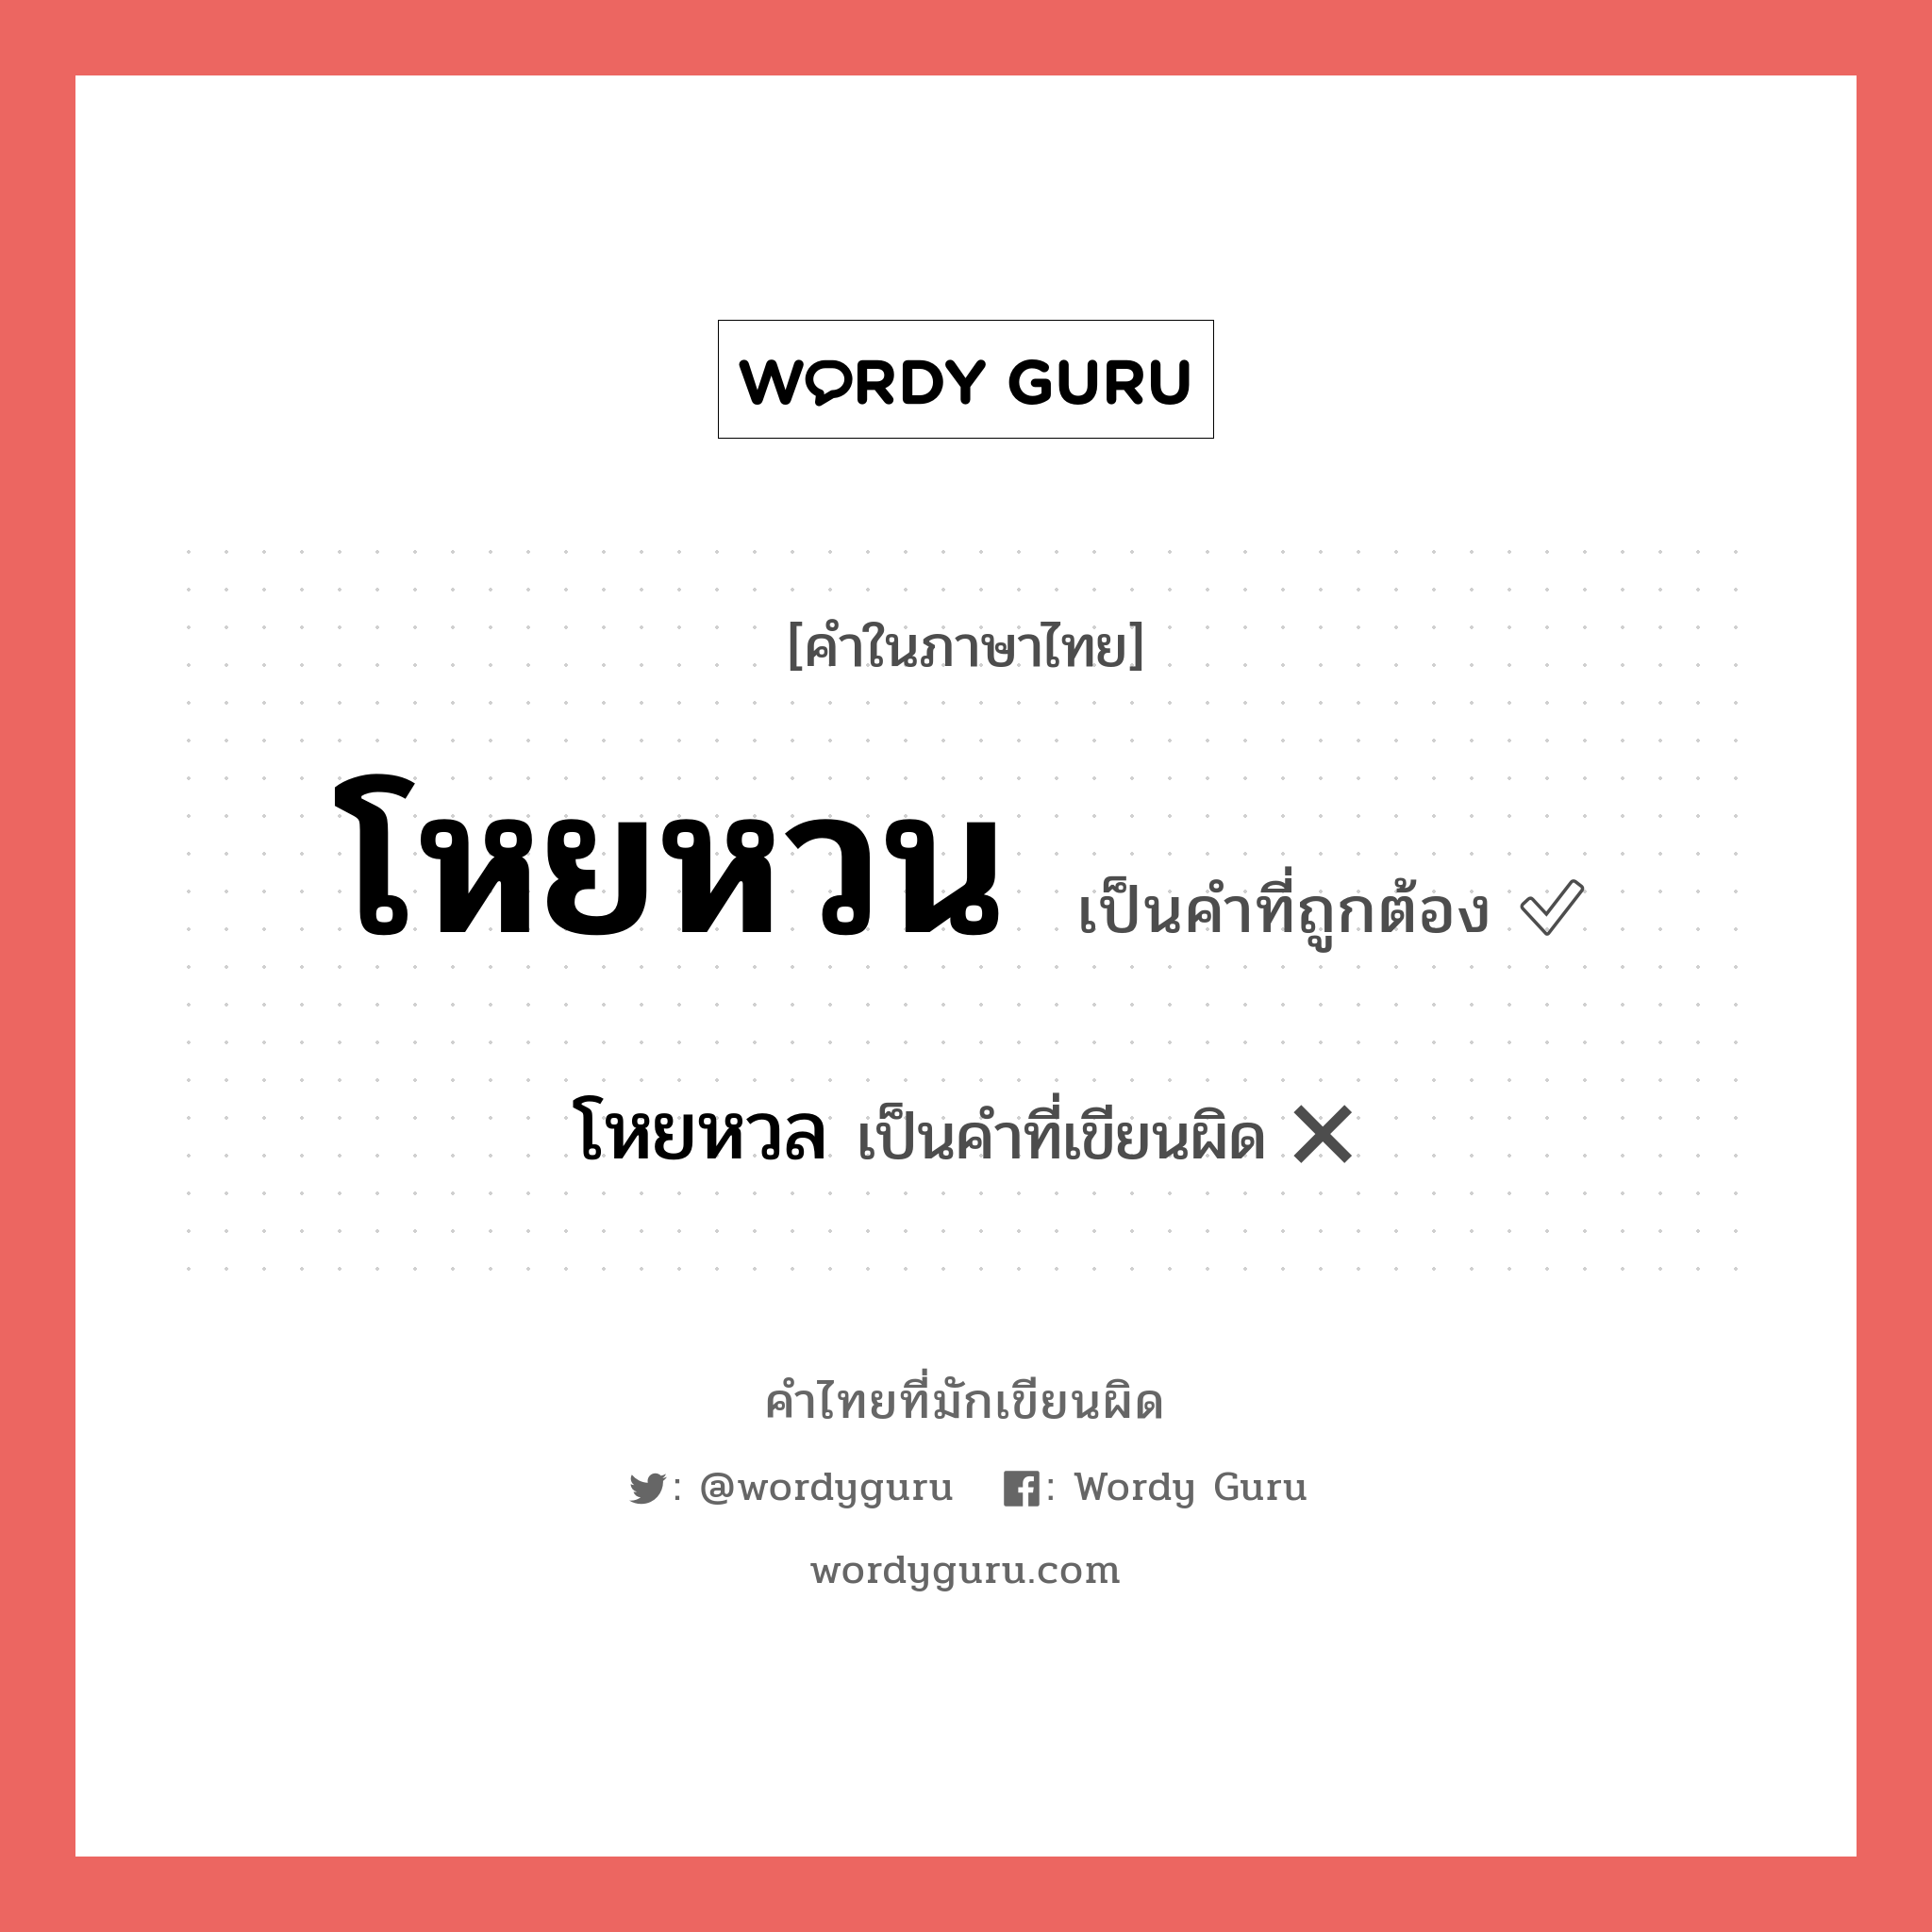 โหยหวน หรือ โหยหวล คำไหนเขียนถูก?, คำในภาษาไทยที่มักเขียนผิด โหยหวน คำที่ผิด ❌ โหยหวล